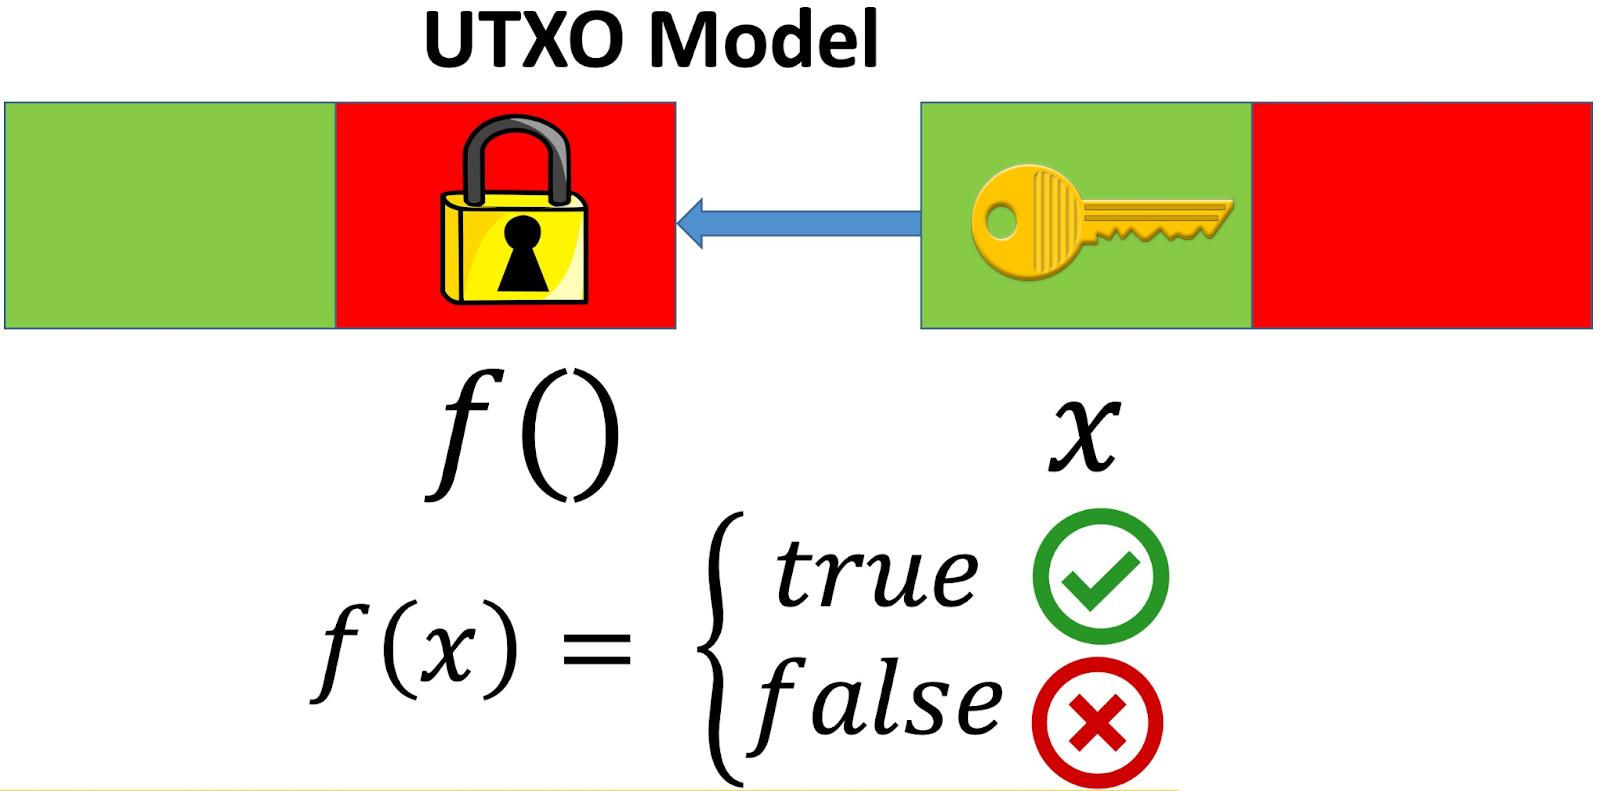 Visual Explanation of the UTXO Model in Bitcoin Transactions